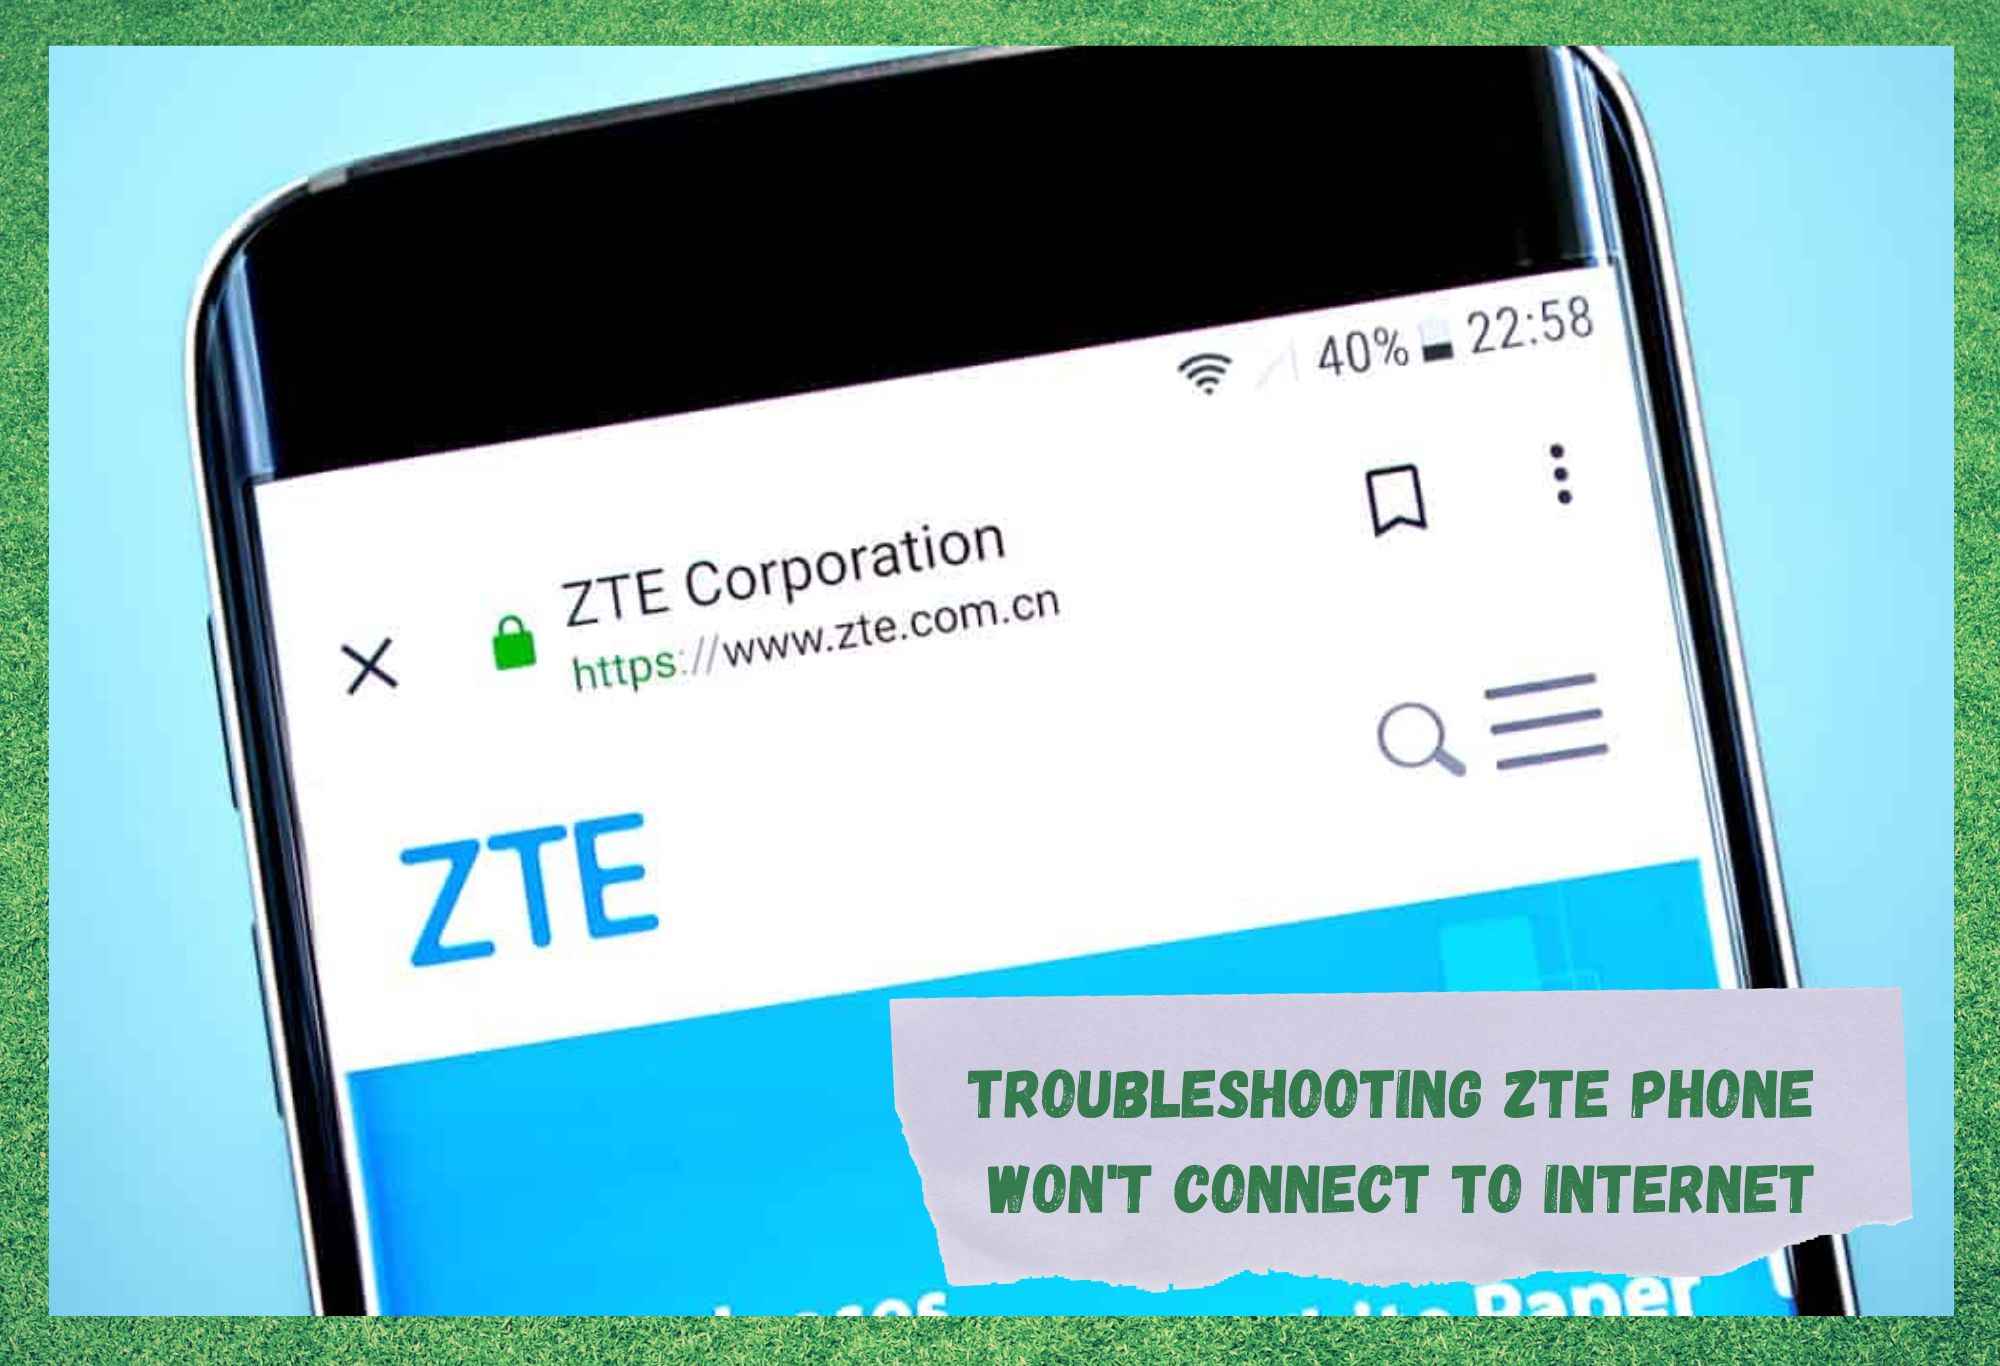 Zte Phone Won't Connect To Internet